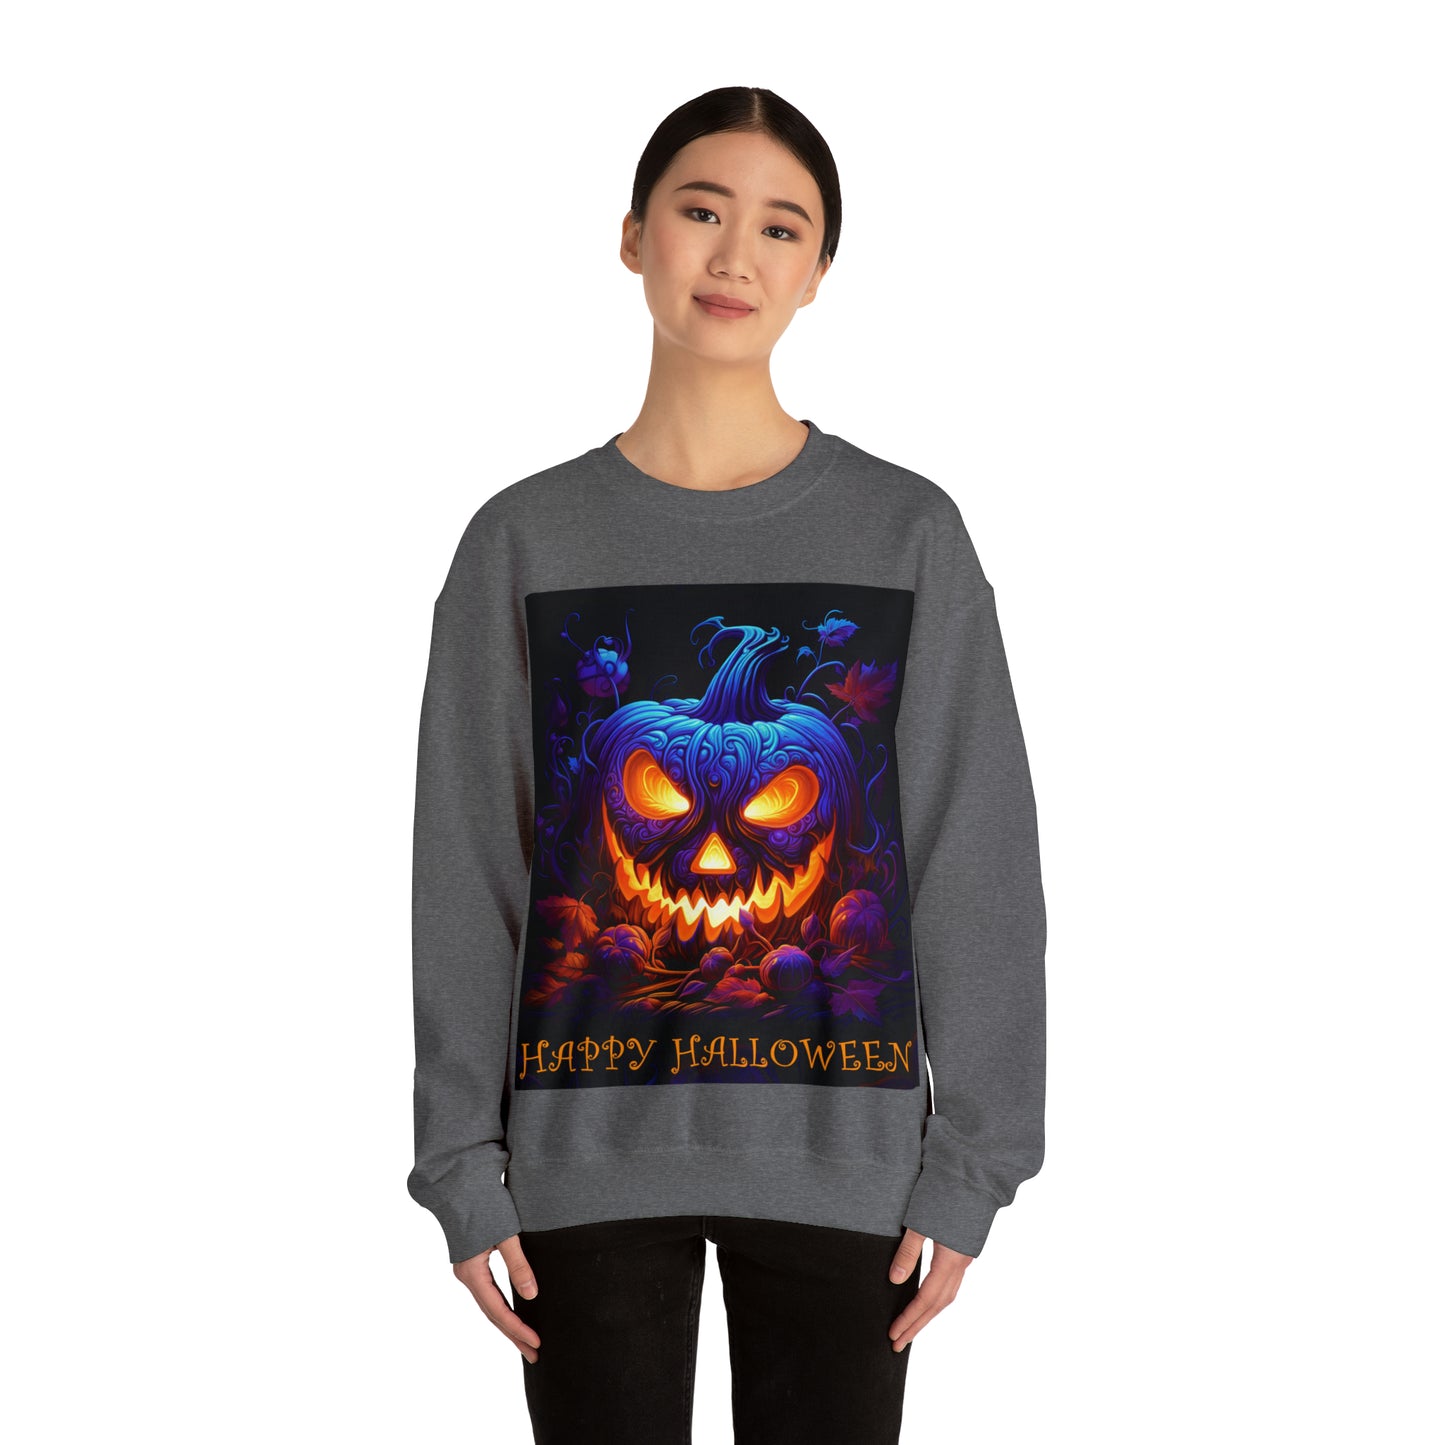 Blacklight-Style Pumpkin Jack-o-Lantern Halloween Sweatshirt Men's Women's Black Grey White Halloween Pumking Sweatshirts